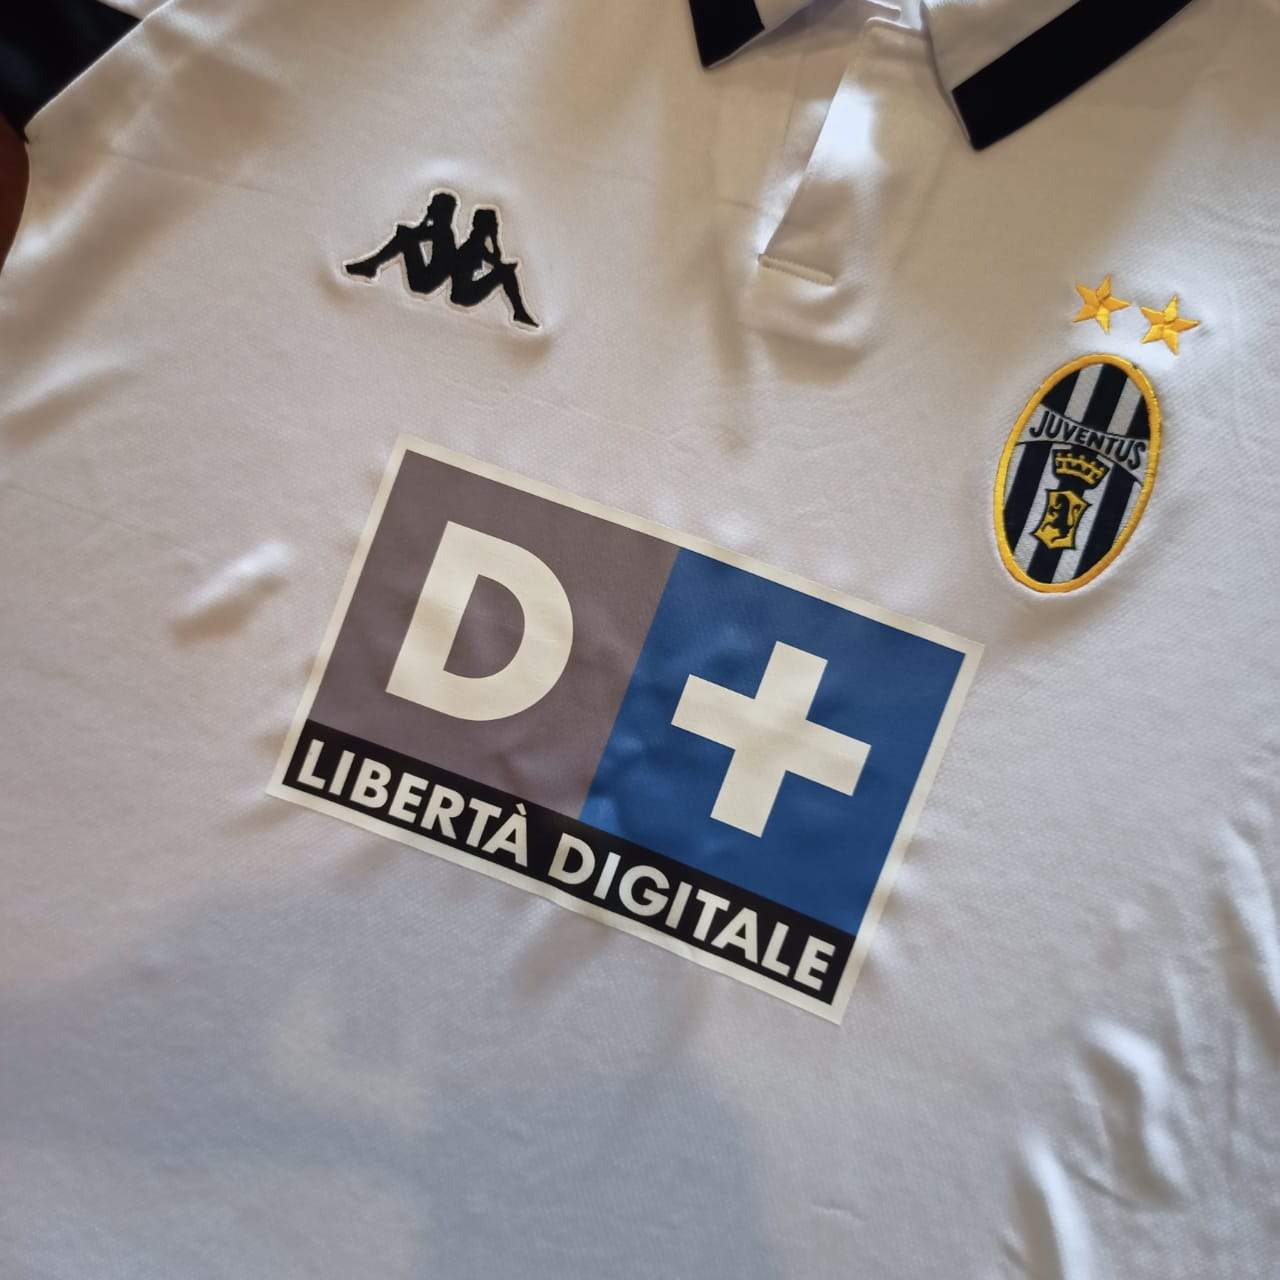 1998/99 Juventus Away Shirt